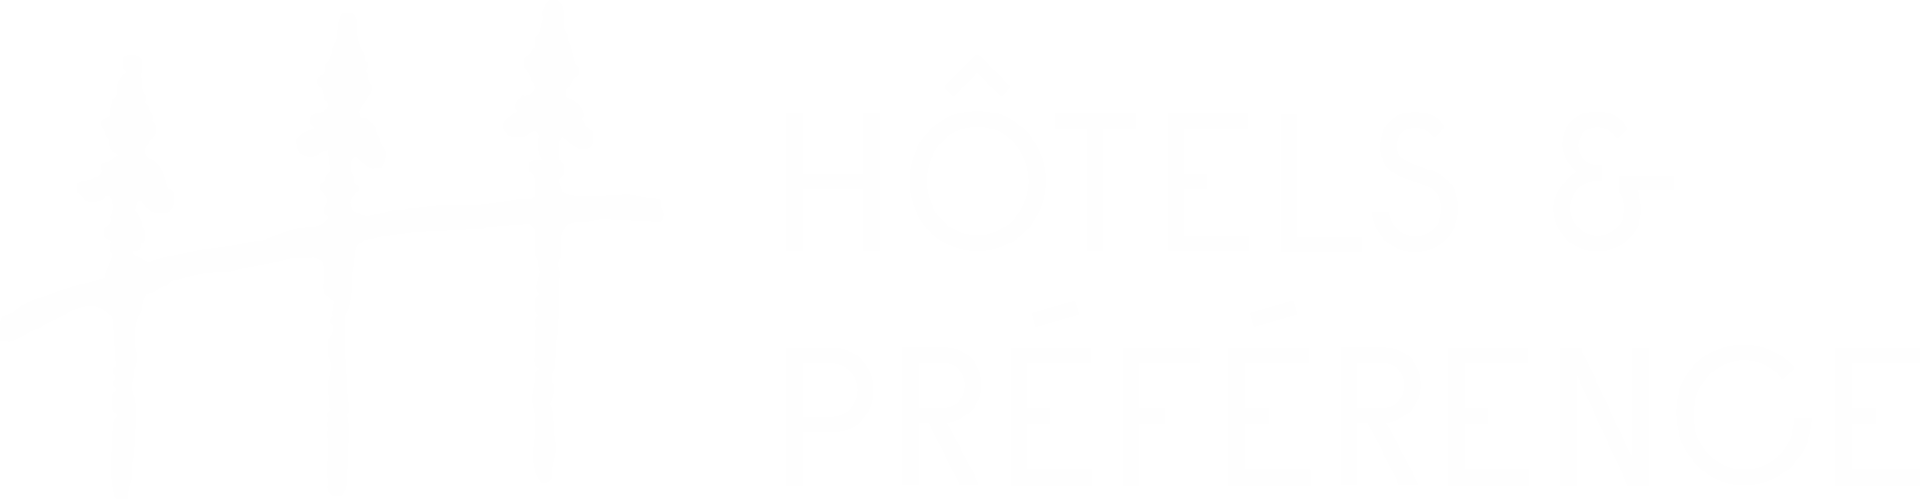 logo hotels preference white